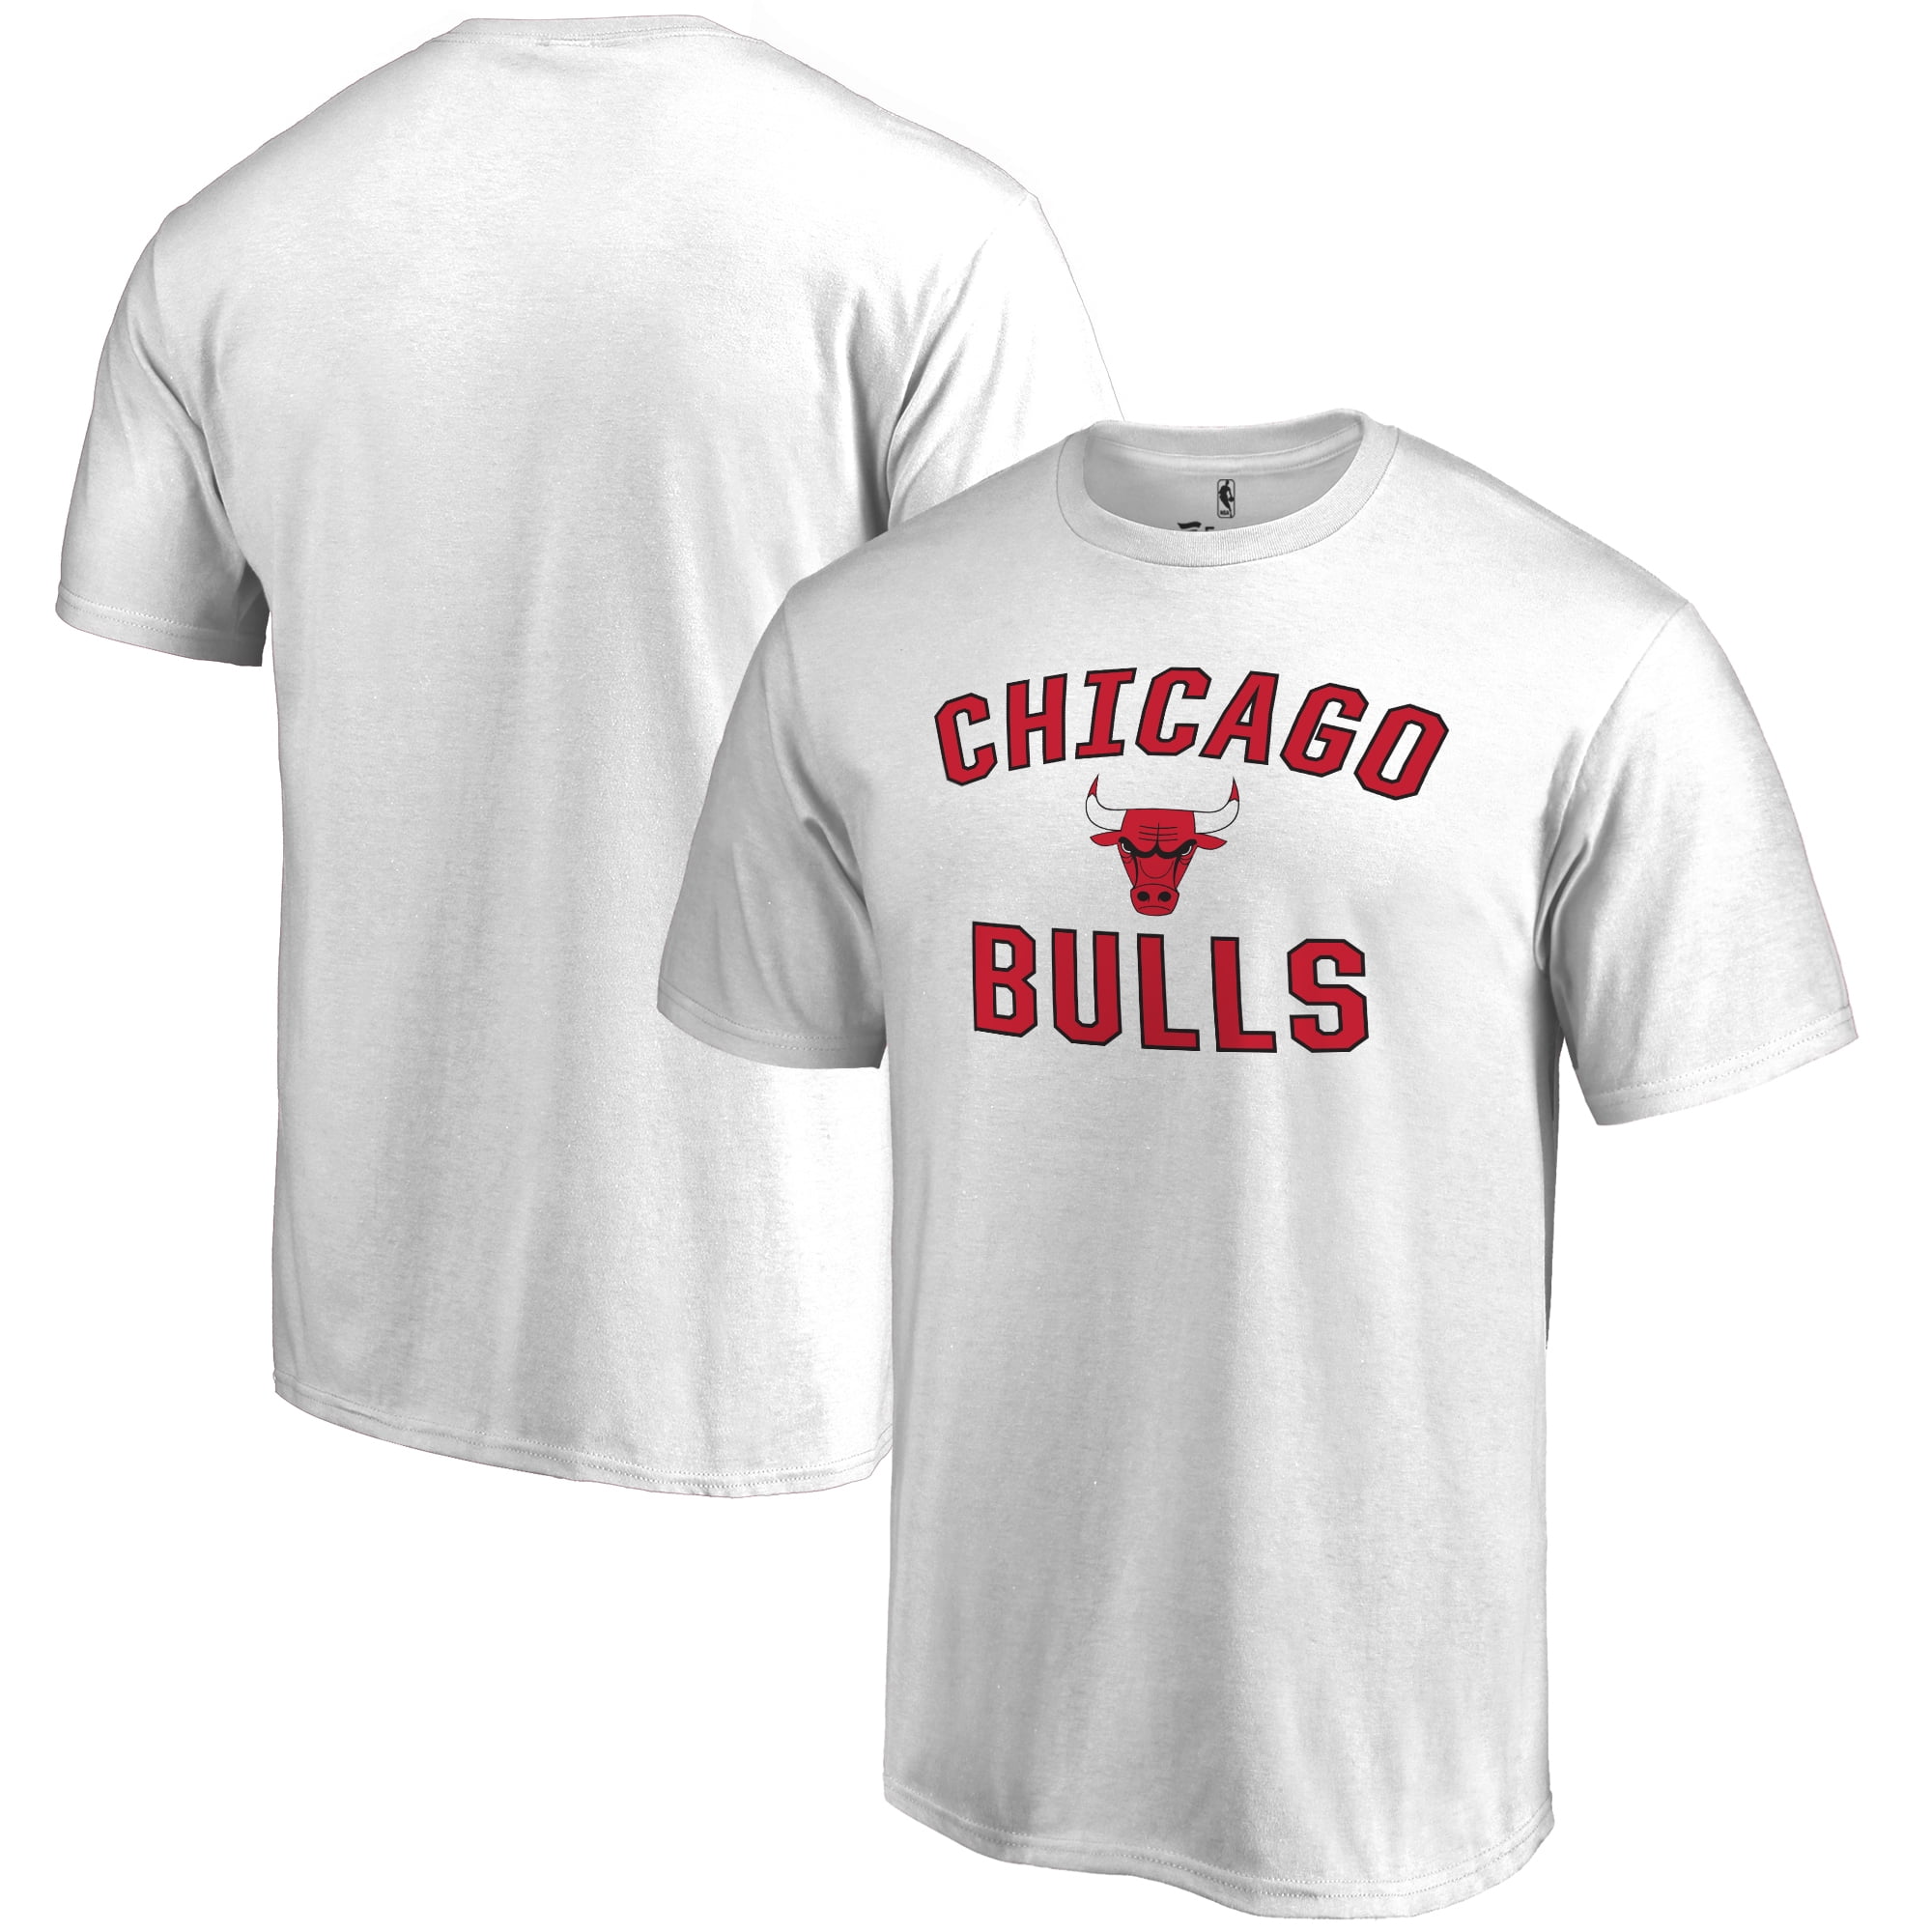 Chicago Bulls Victory Arch T-Shirt 